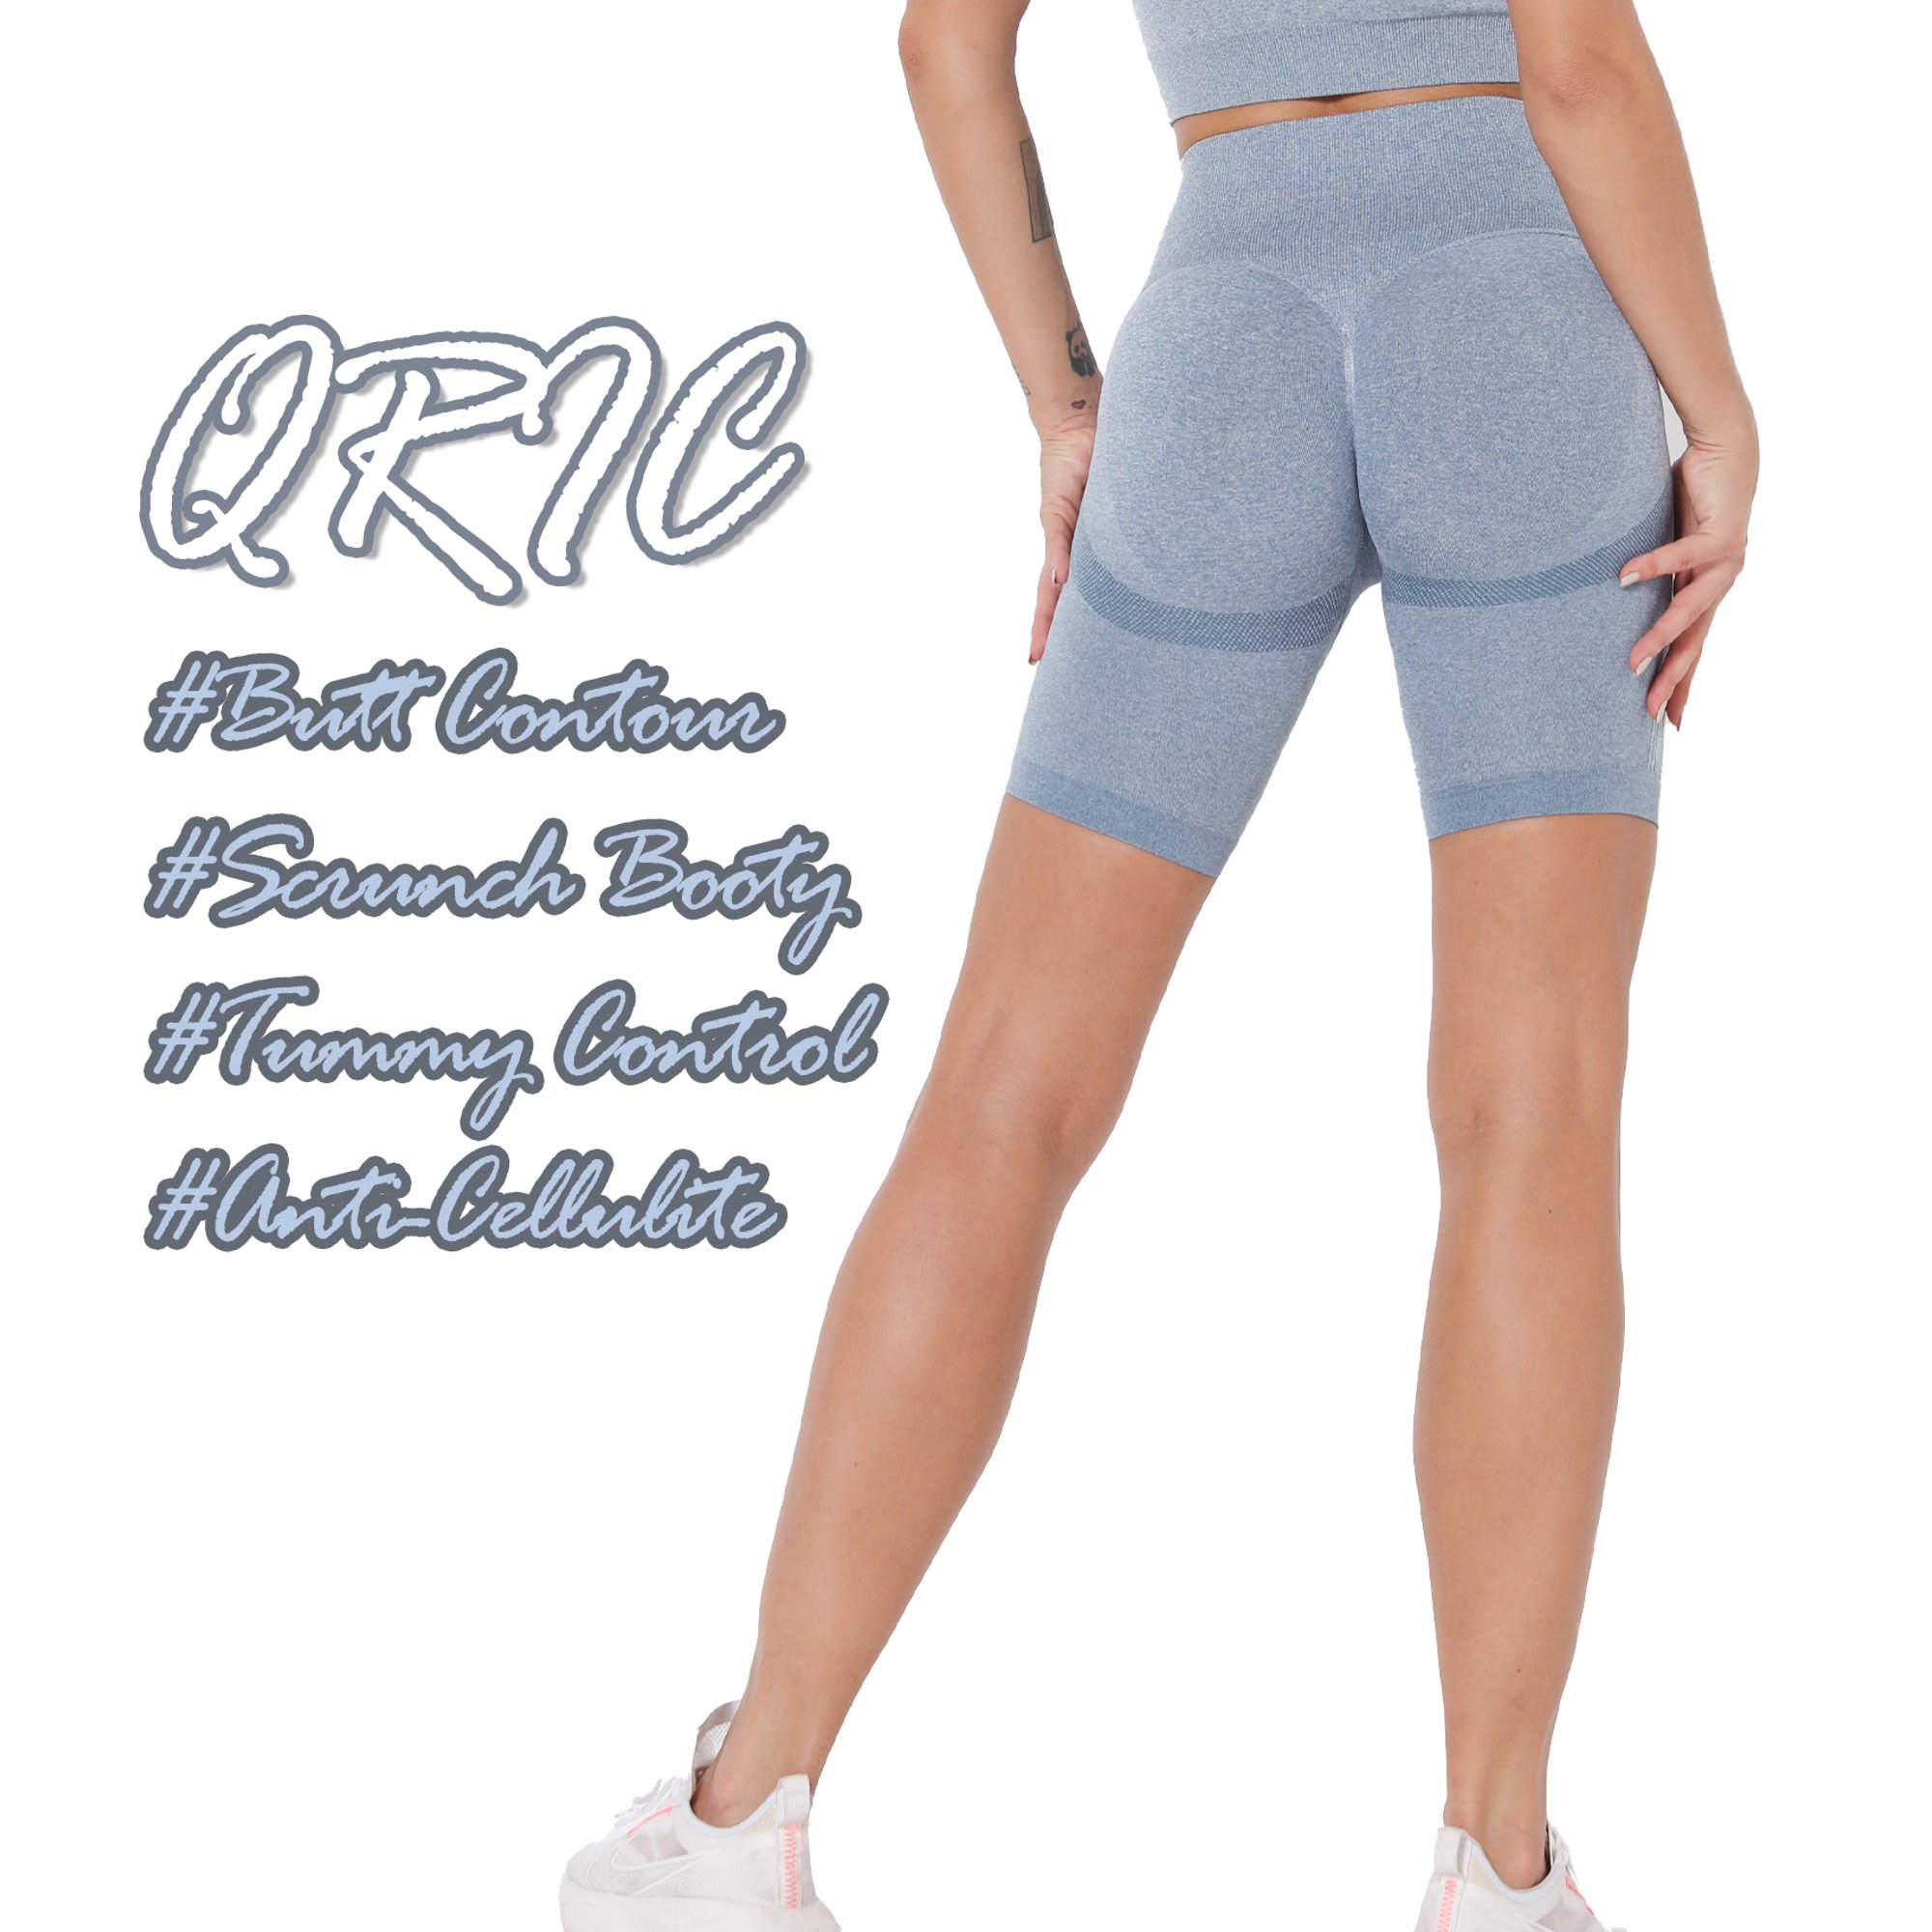 QRIC High Waisted Seamless Biker Shorts for Women Tummy Control